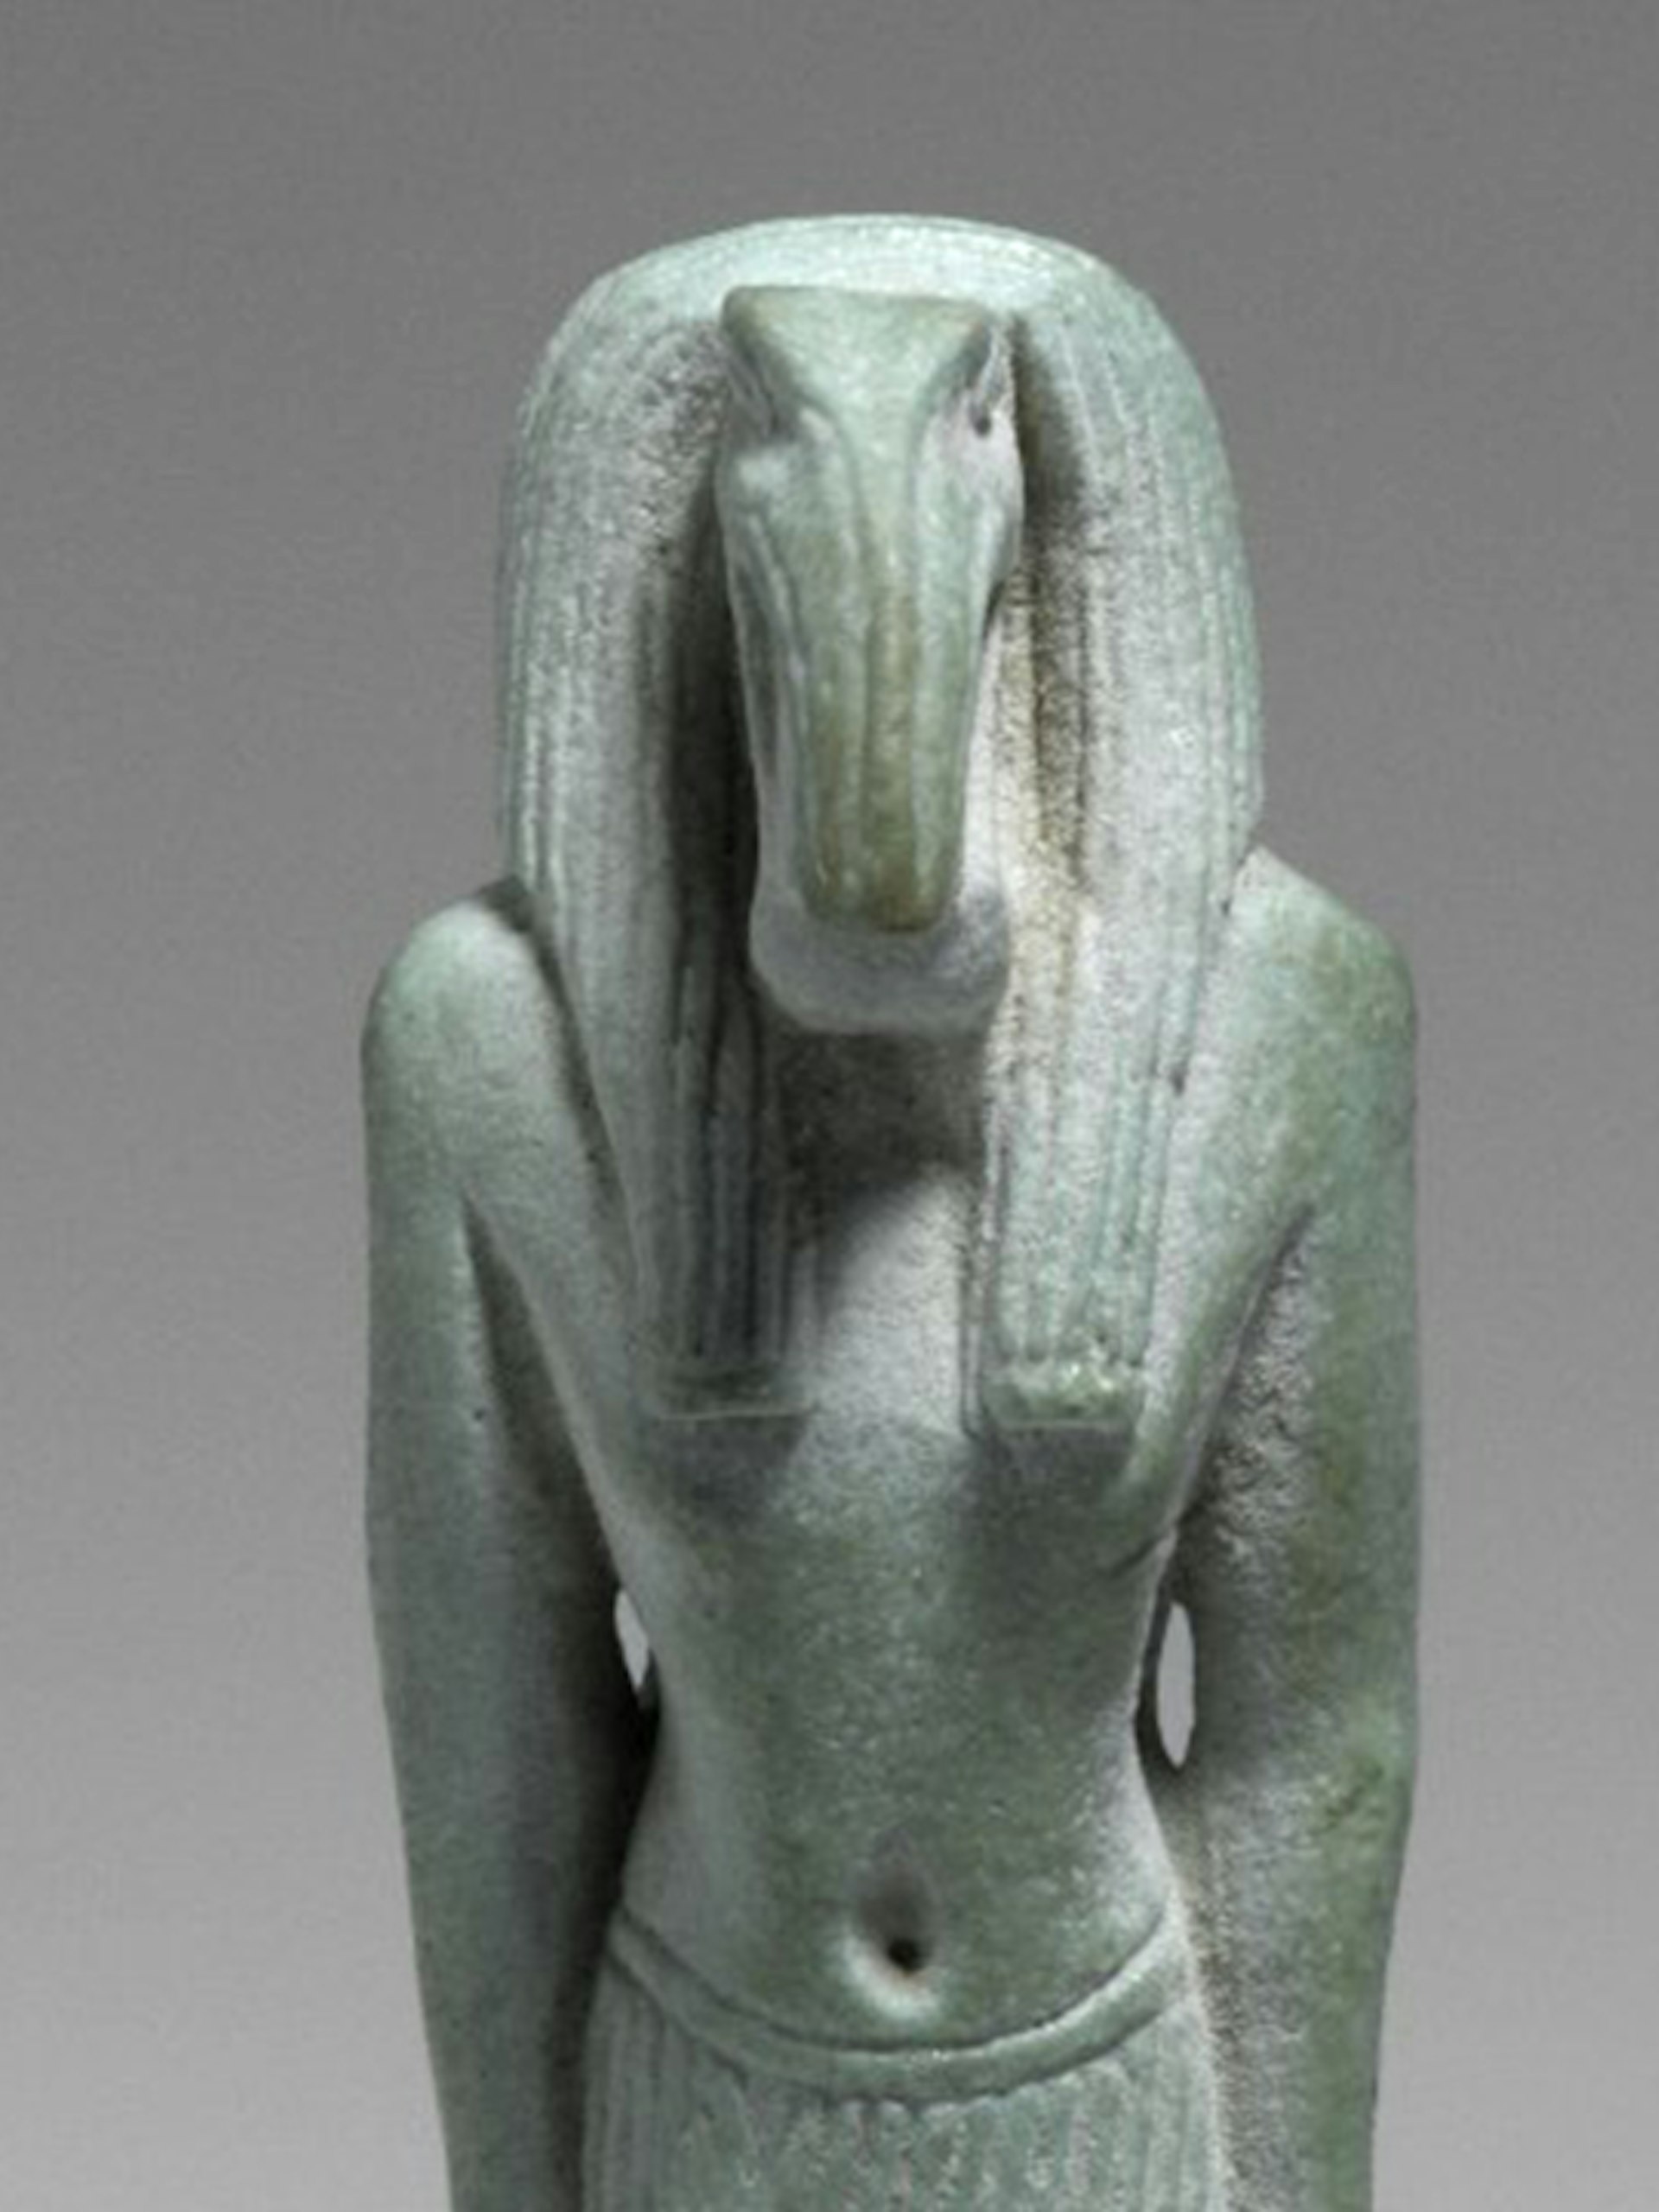 Thoth, Egyptian God of Wisdom (3:2)